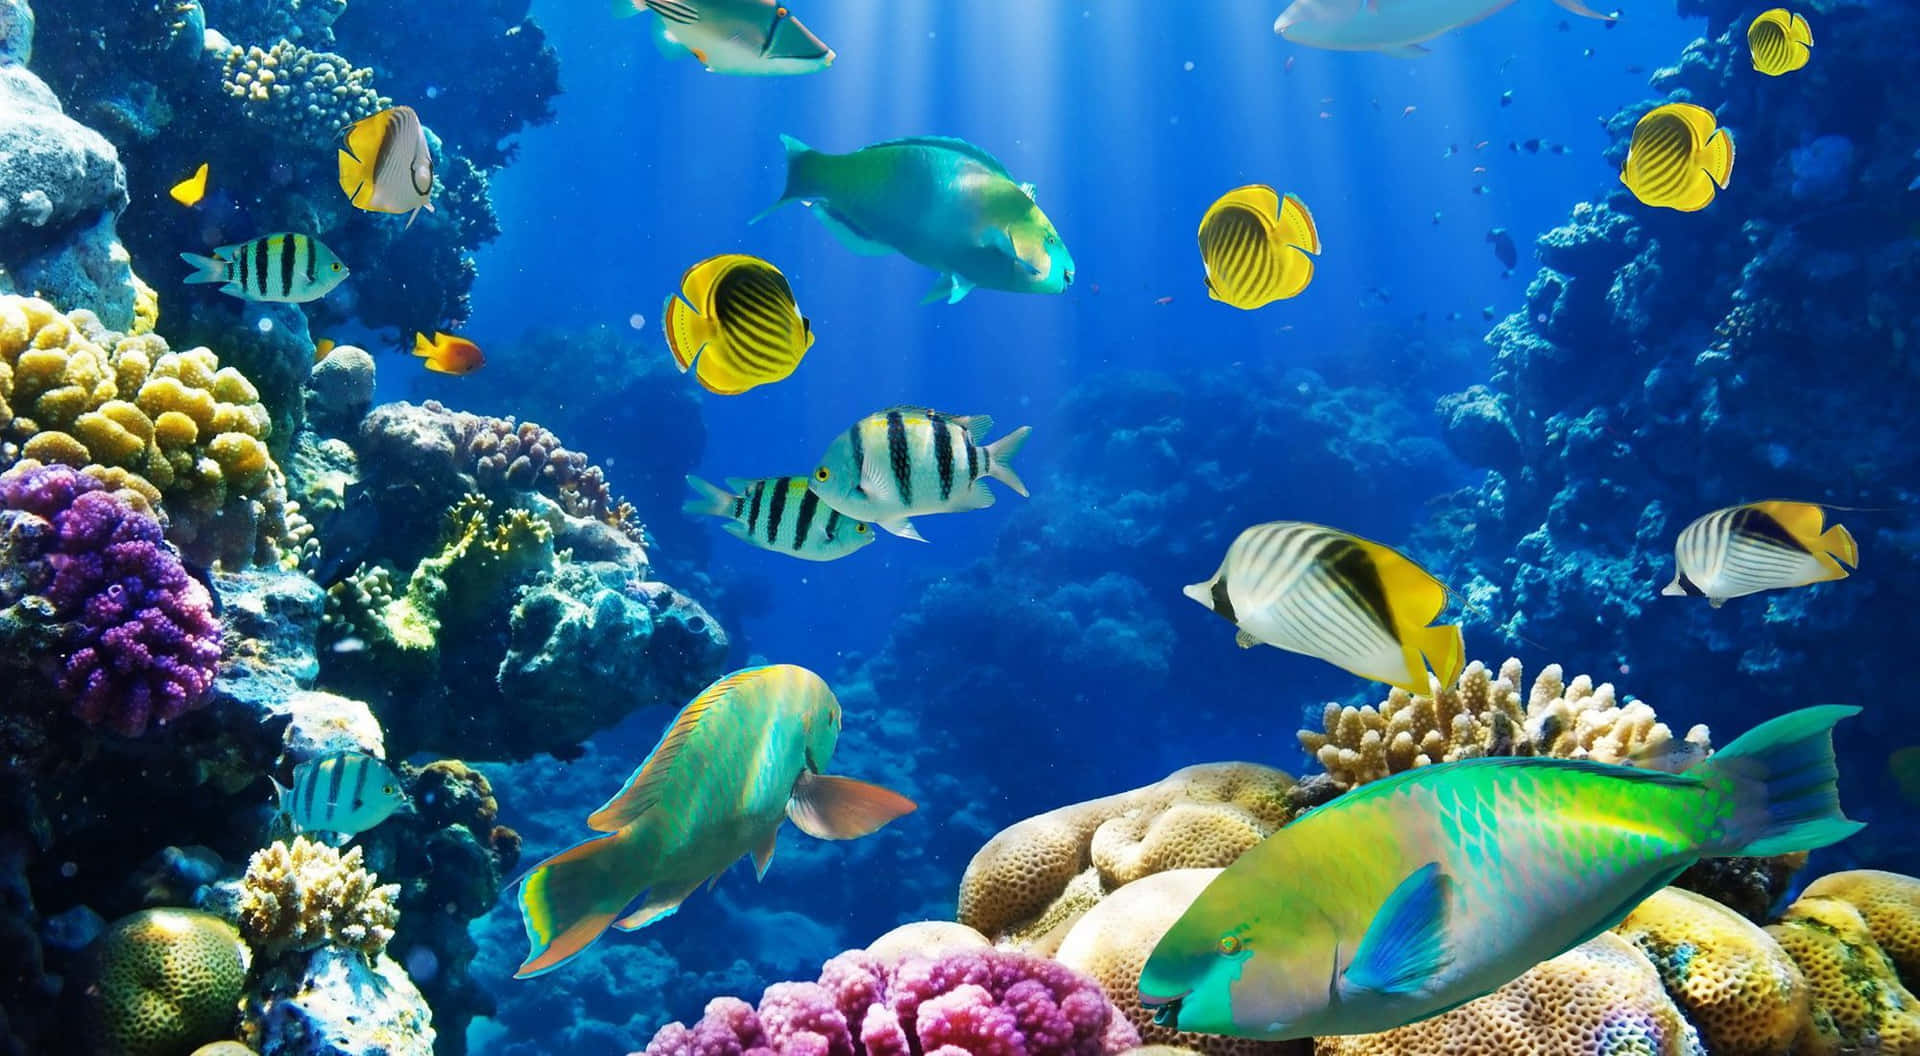 Bright School of Fish | Underwater Hd Nature Scene